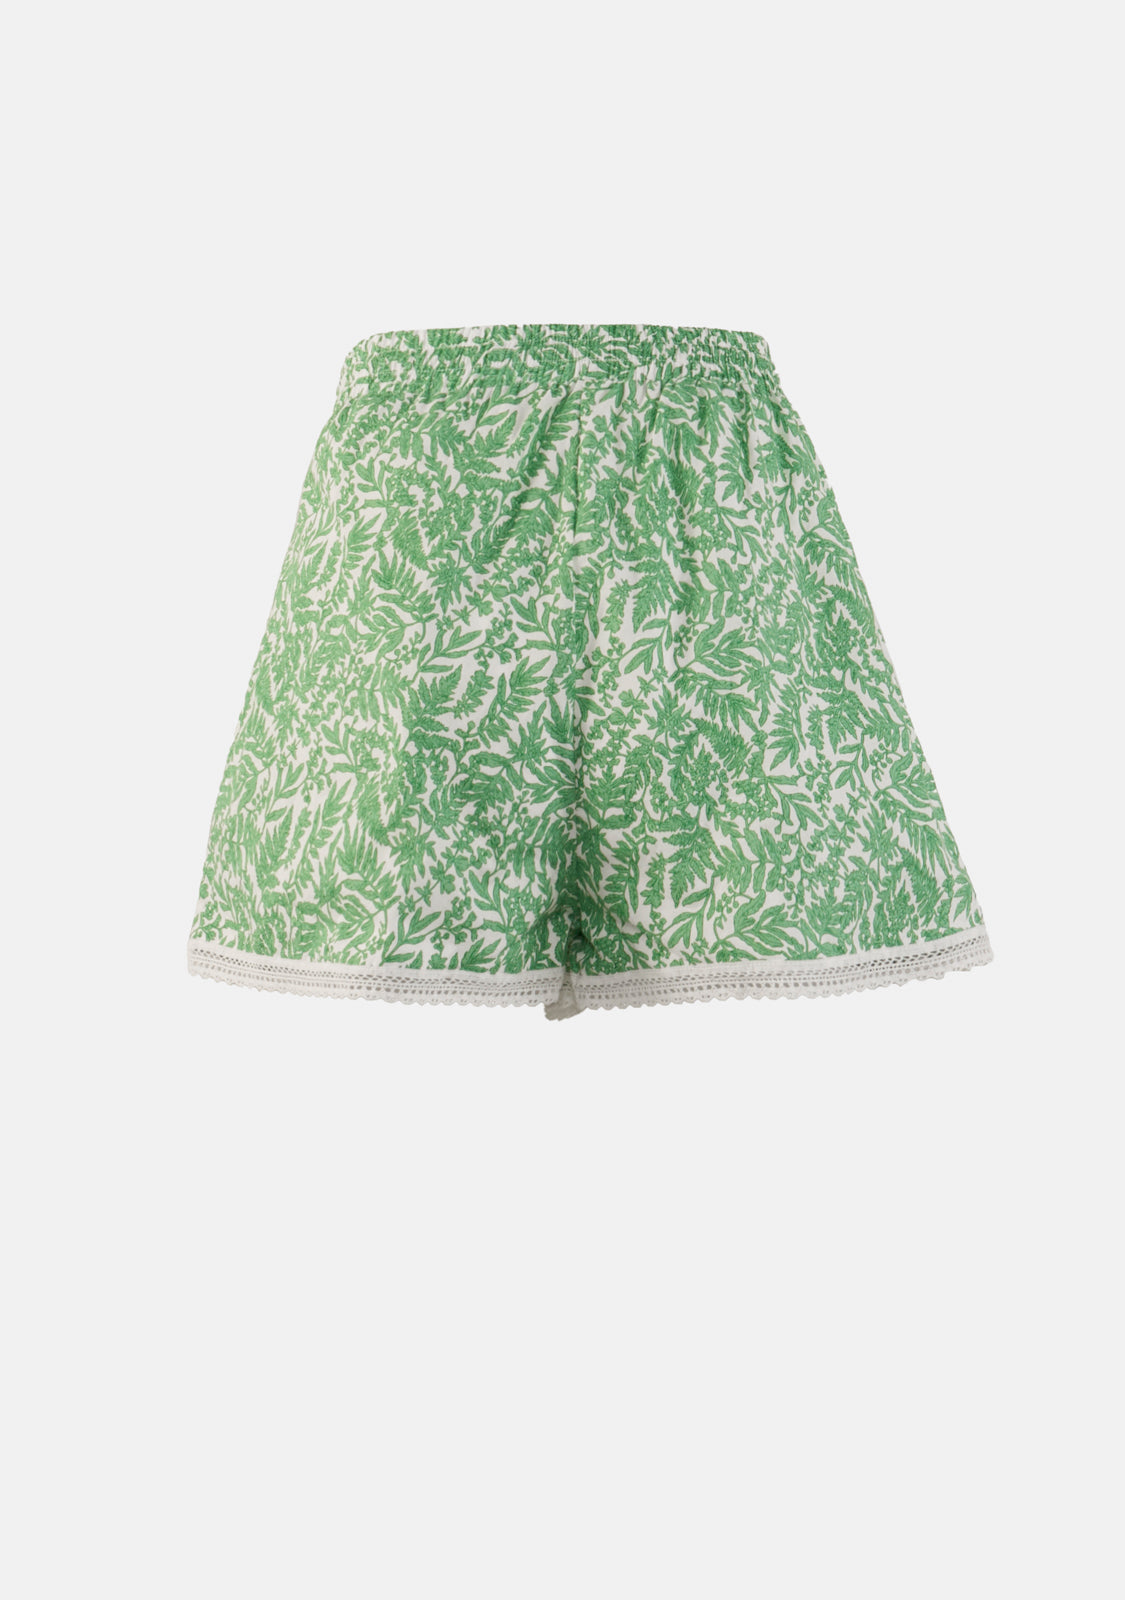 Print Lace Trim Shorts